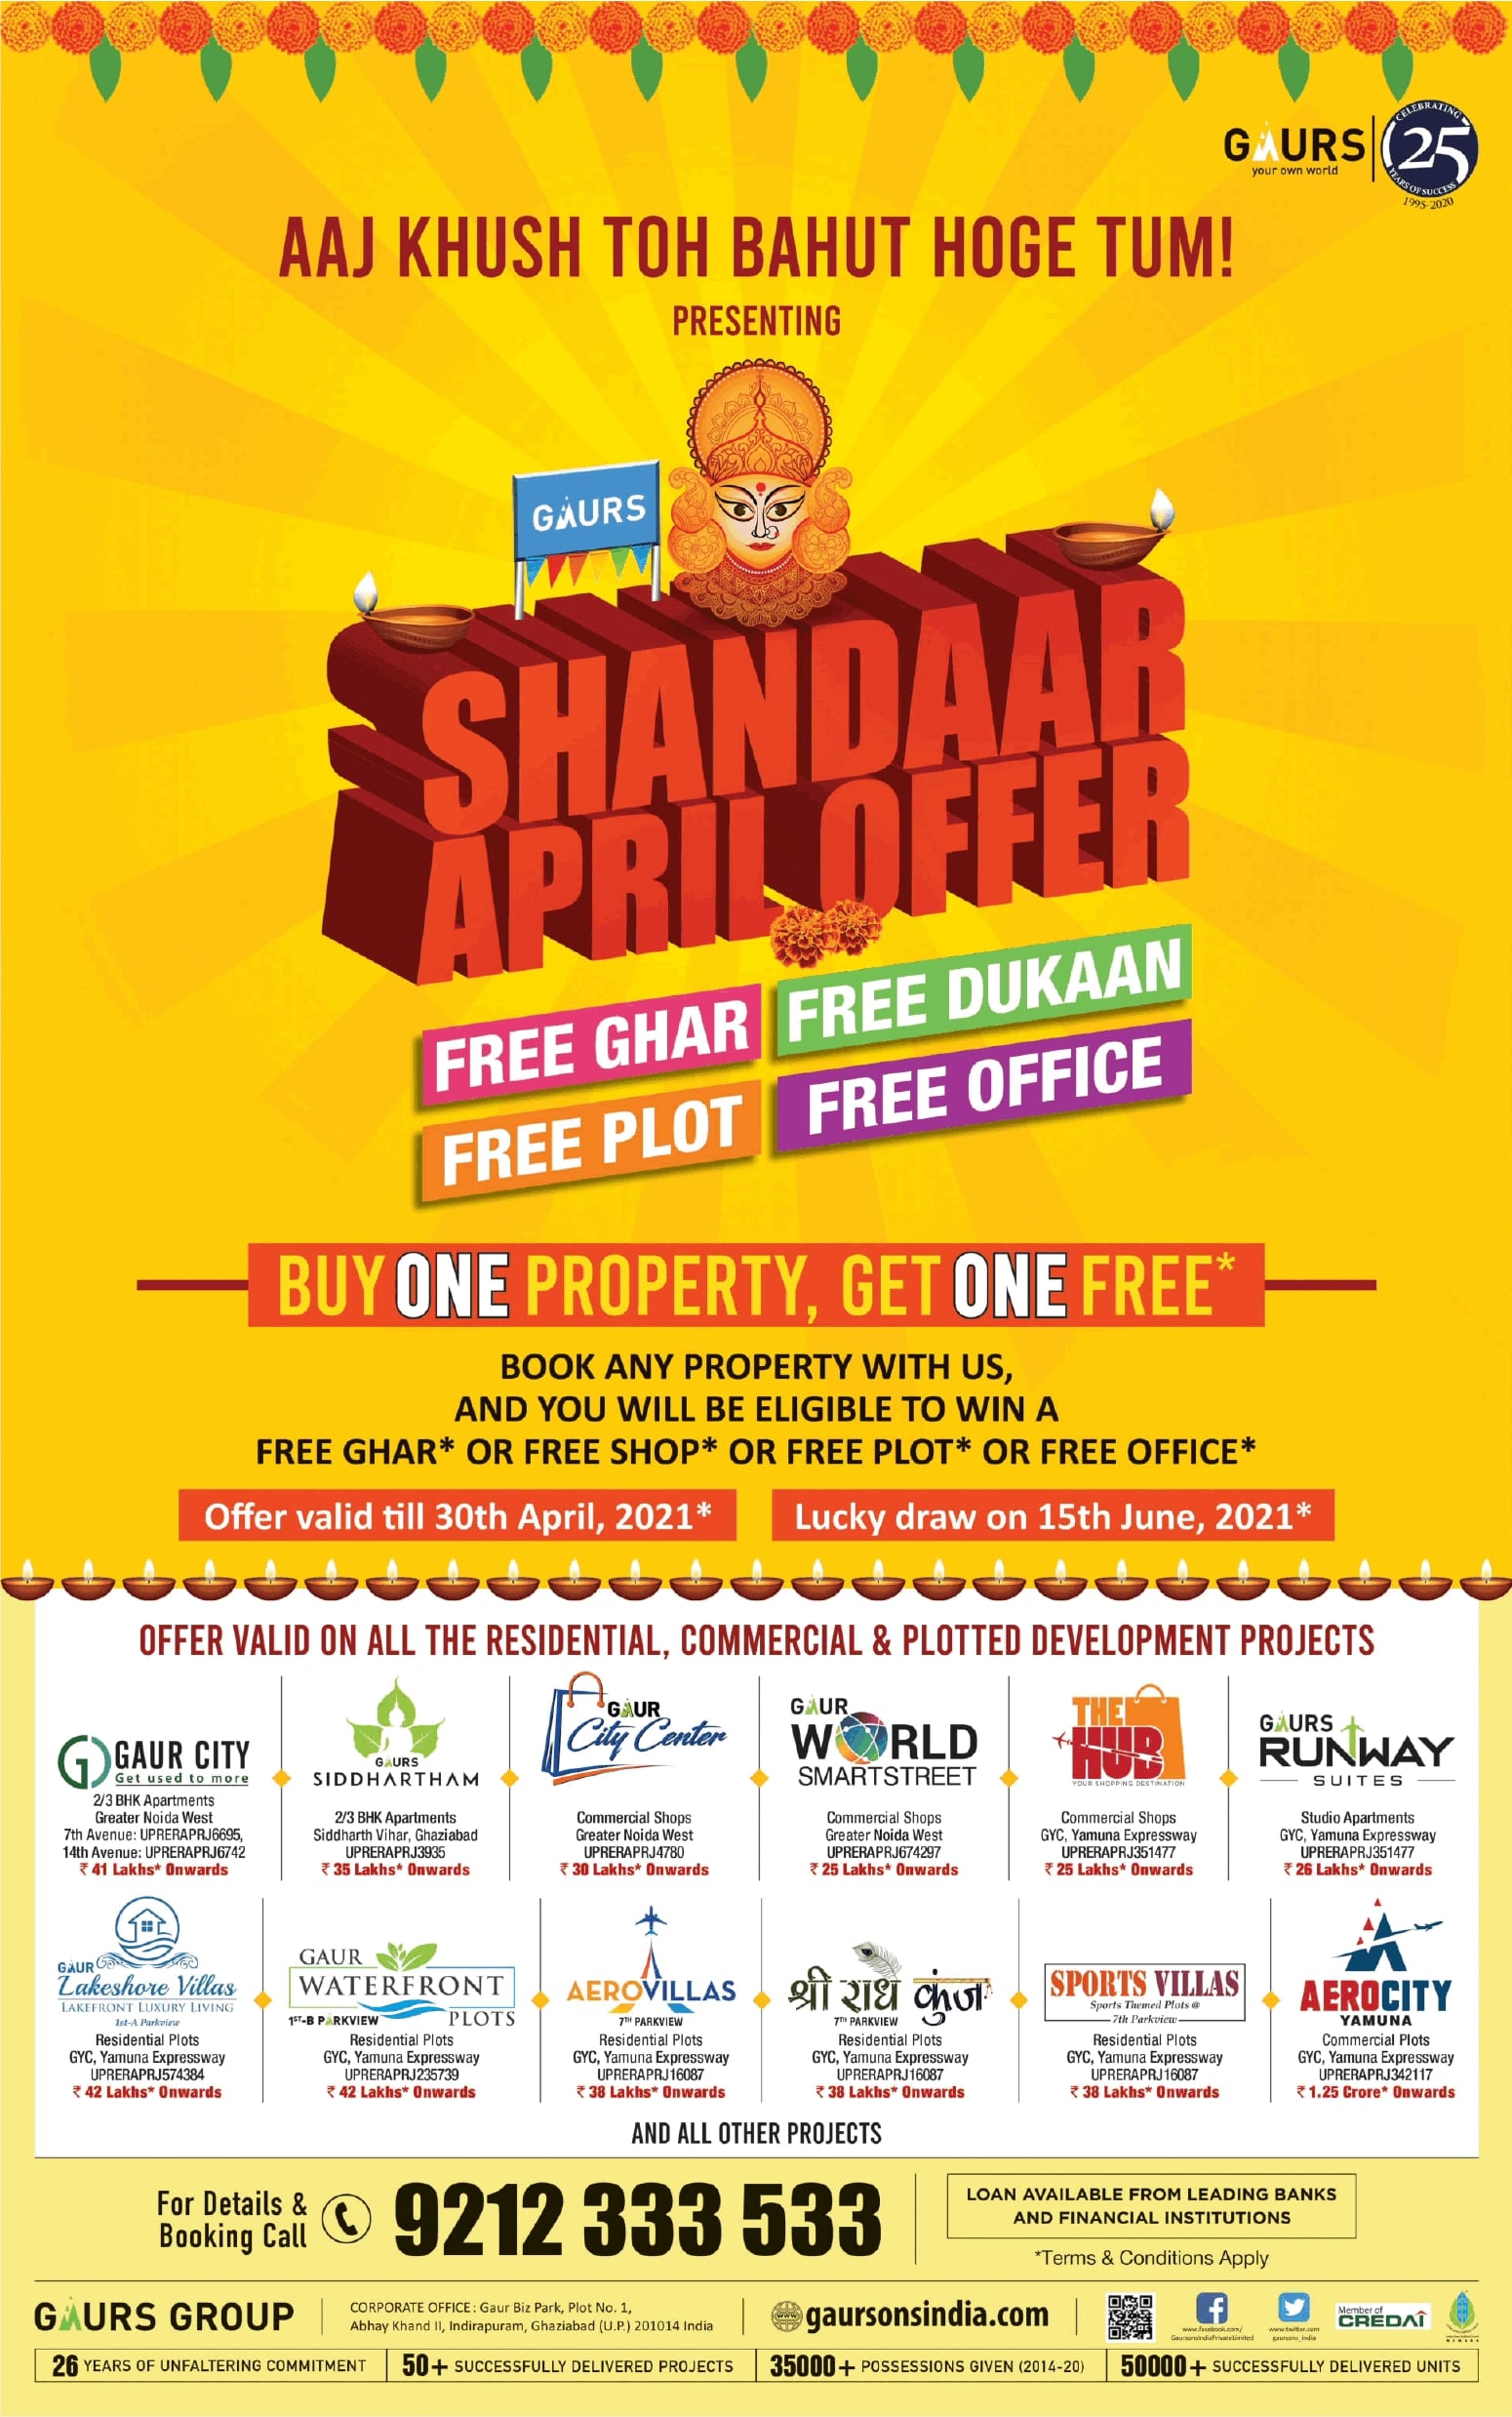 gaurs-shandaar-april-offer-buy-one-property-get-one-free-ad-delhi-times-10-04-2021